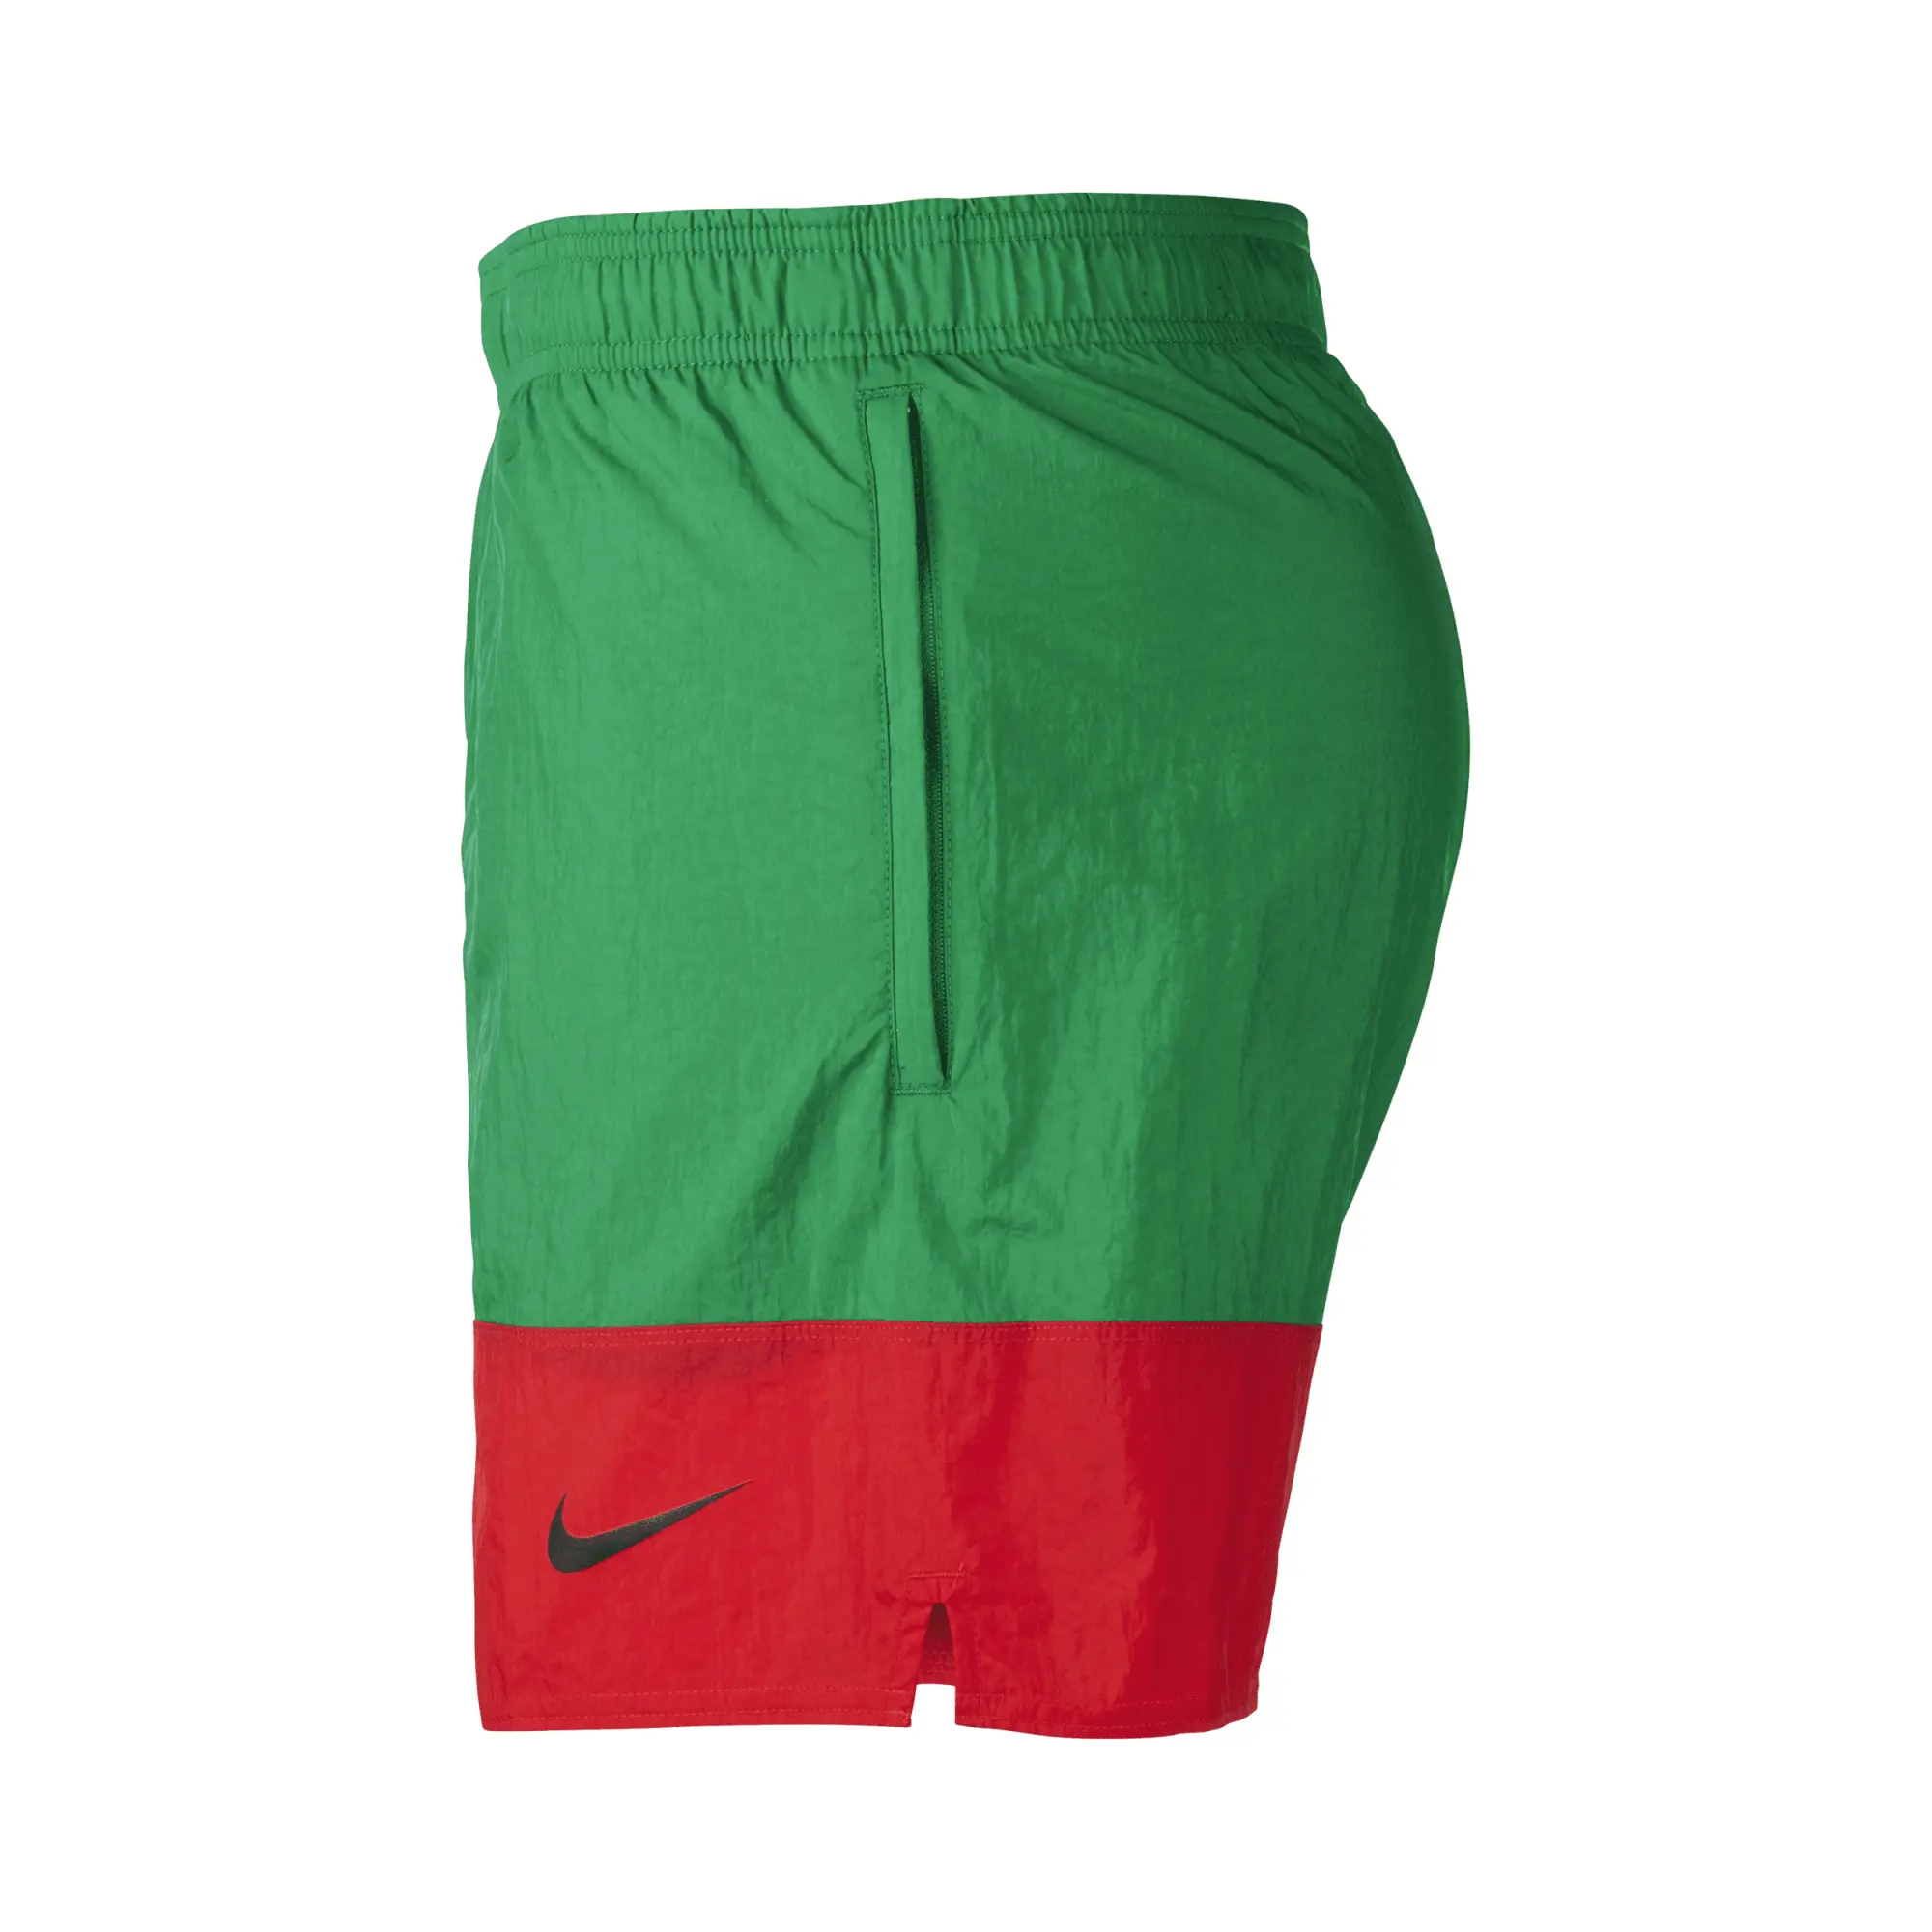 Nike Portugal Woven Football Shorts Mens - Green